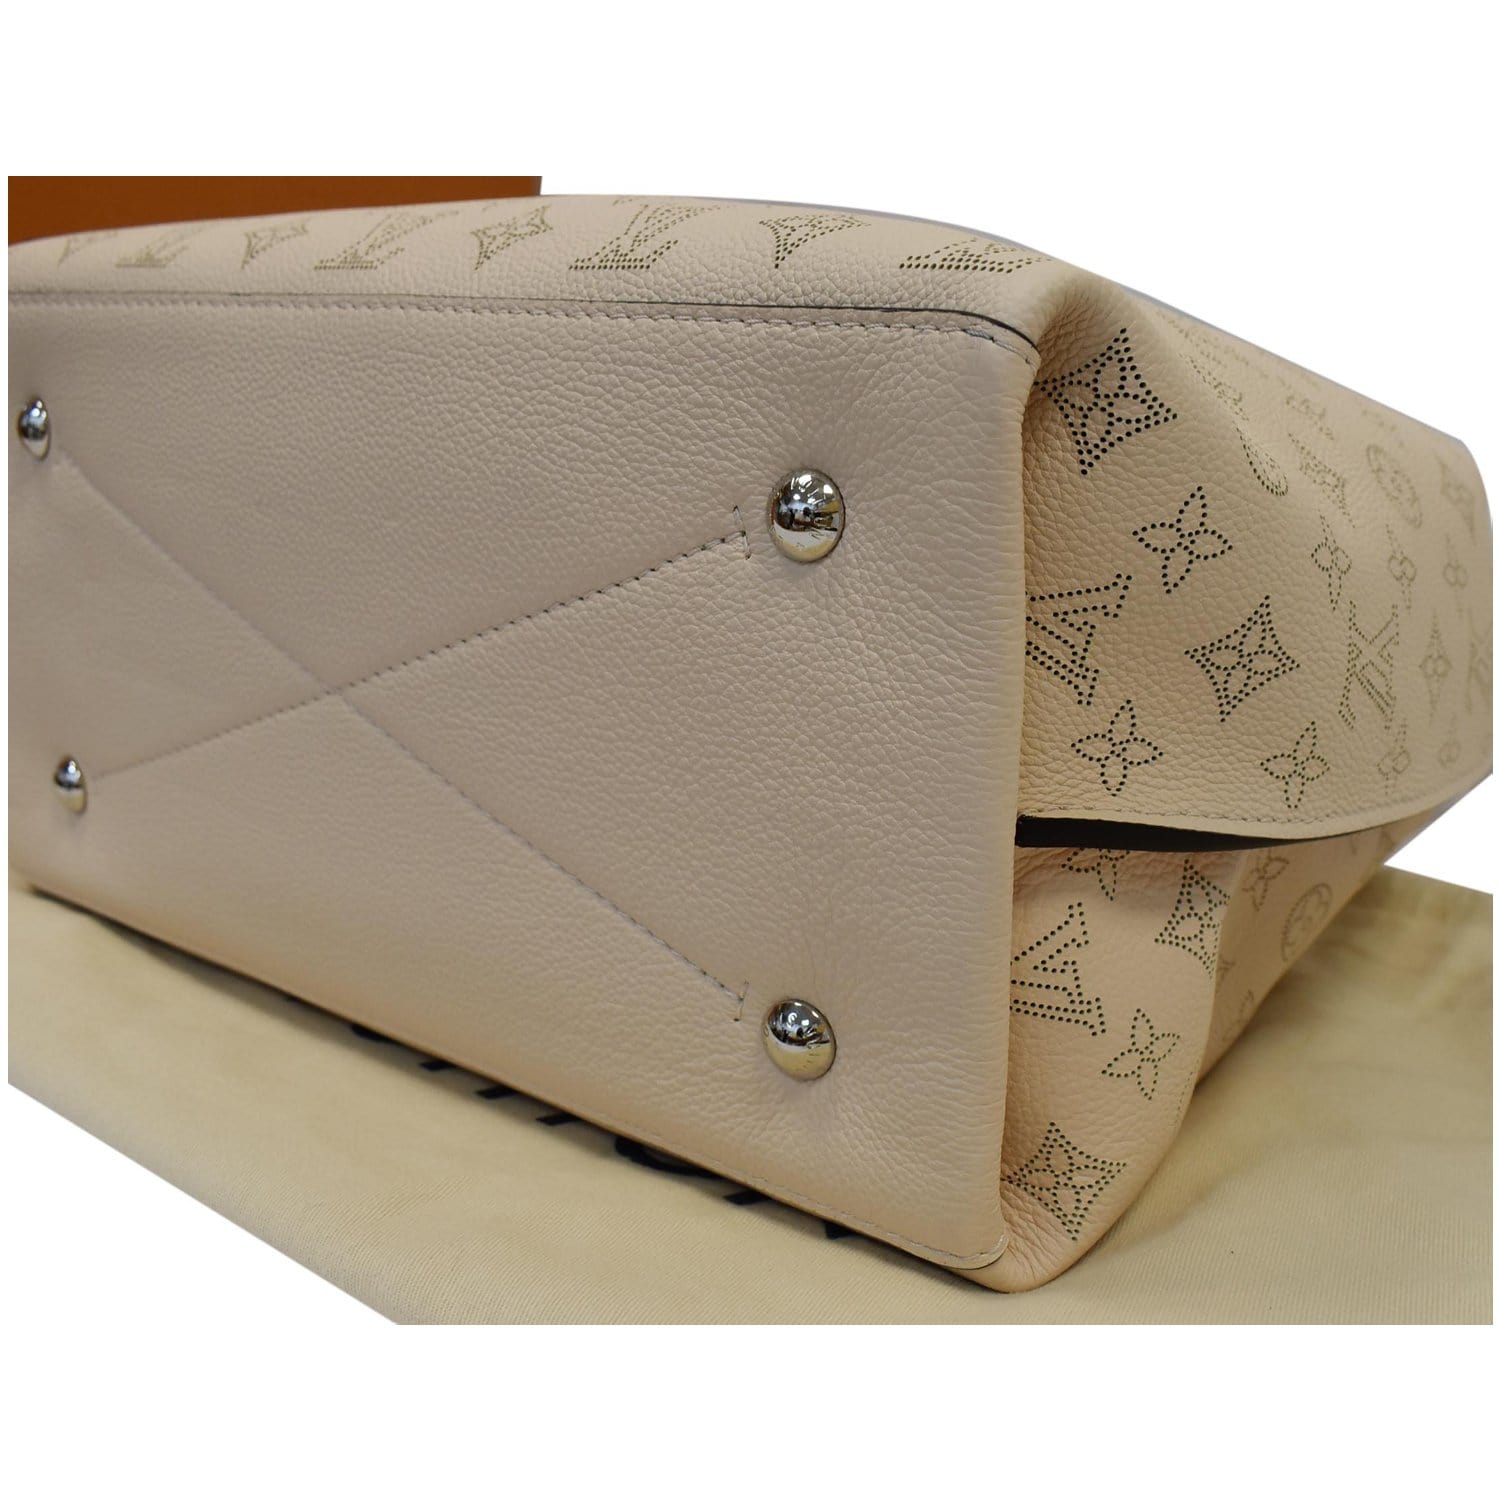 LUXURY* Louis Vuitton Handbag, 'Carmel' in Mahina Leather